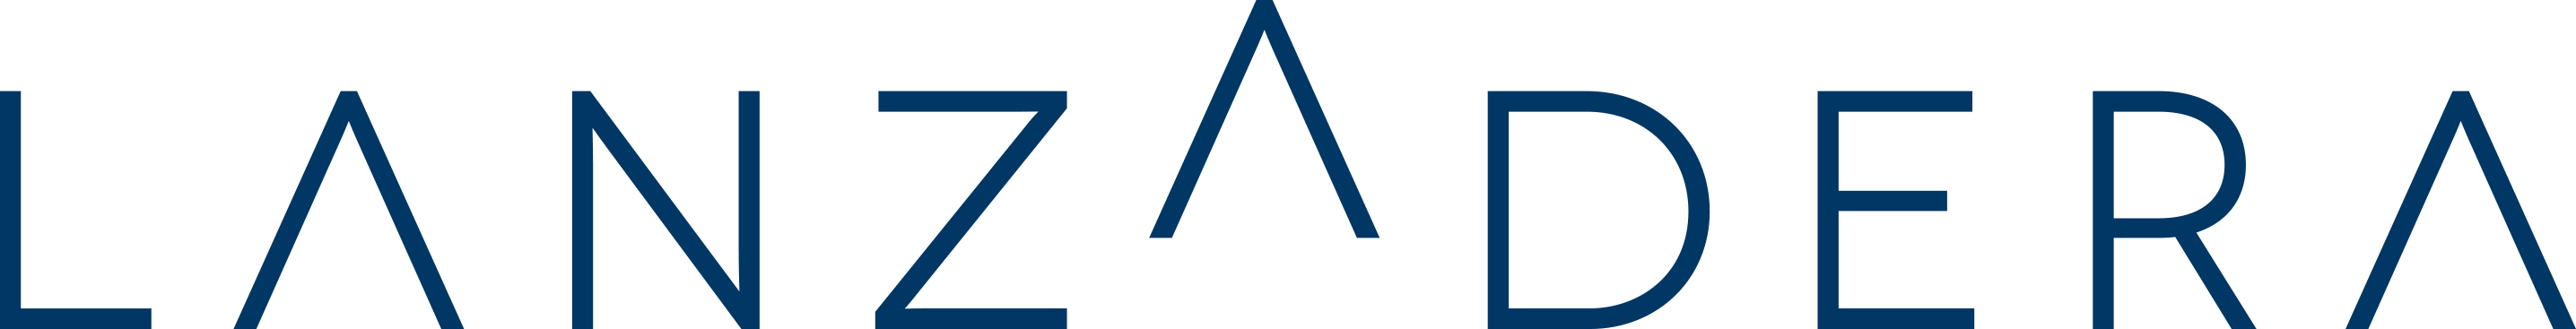 Logo lanzadera 2020